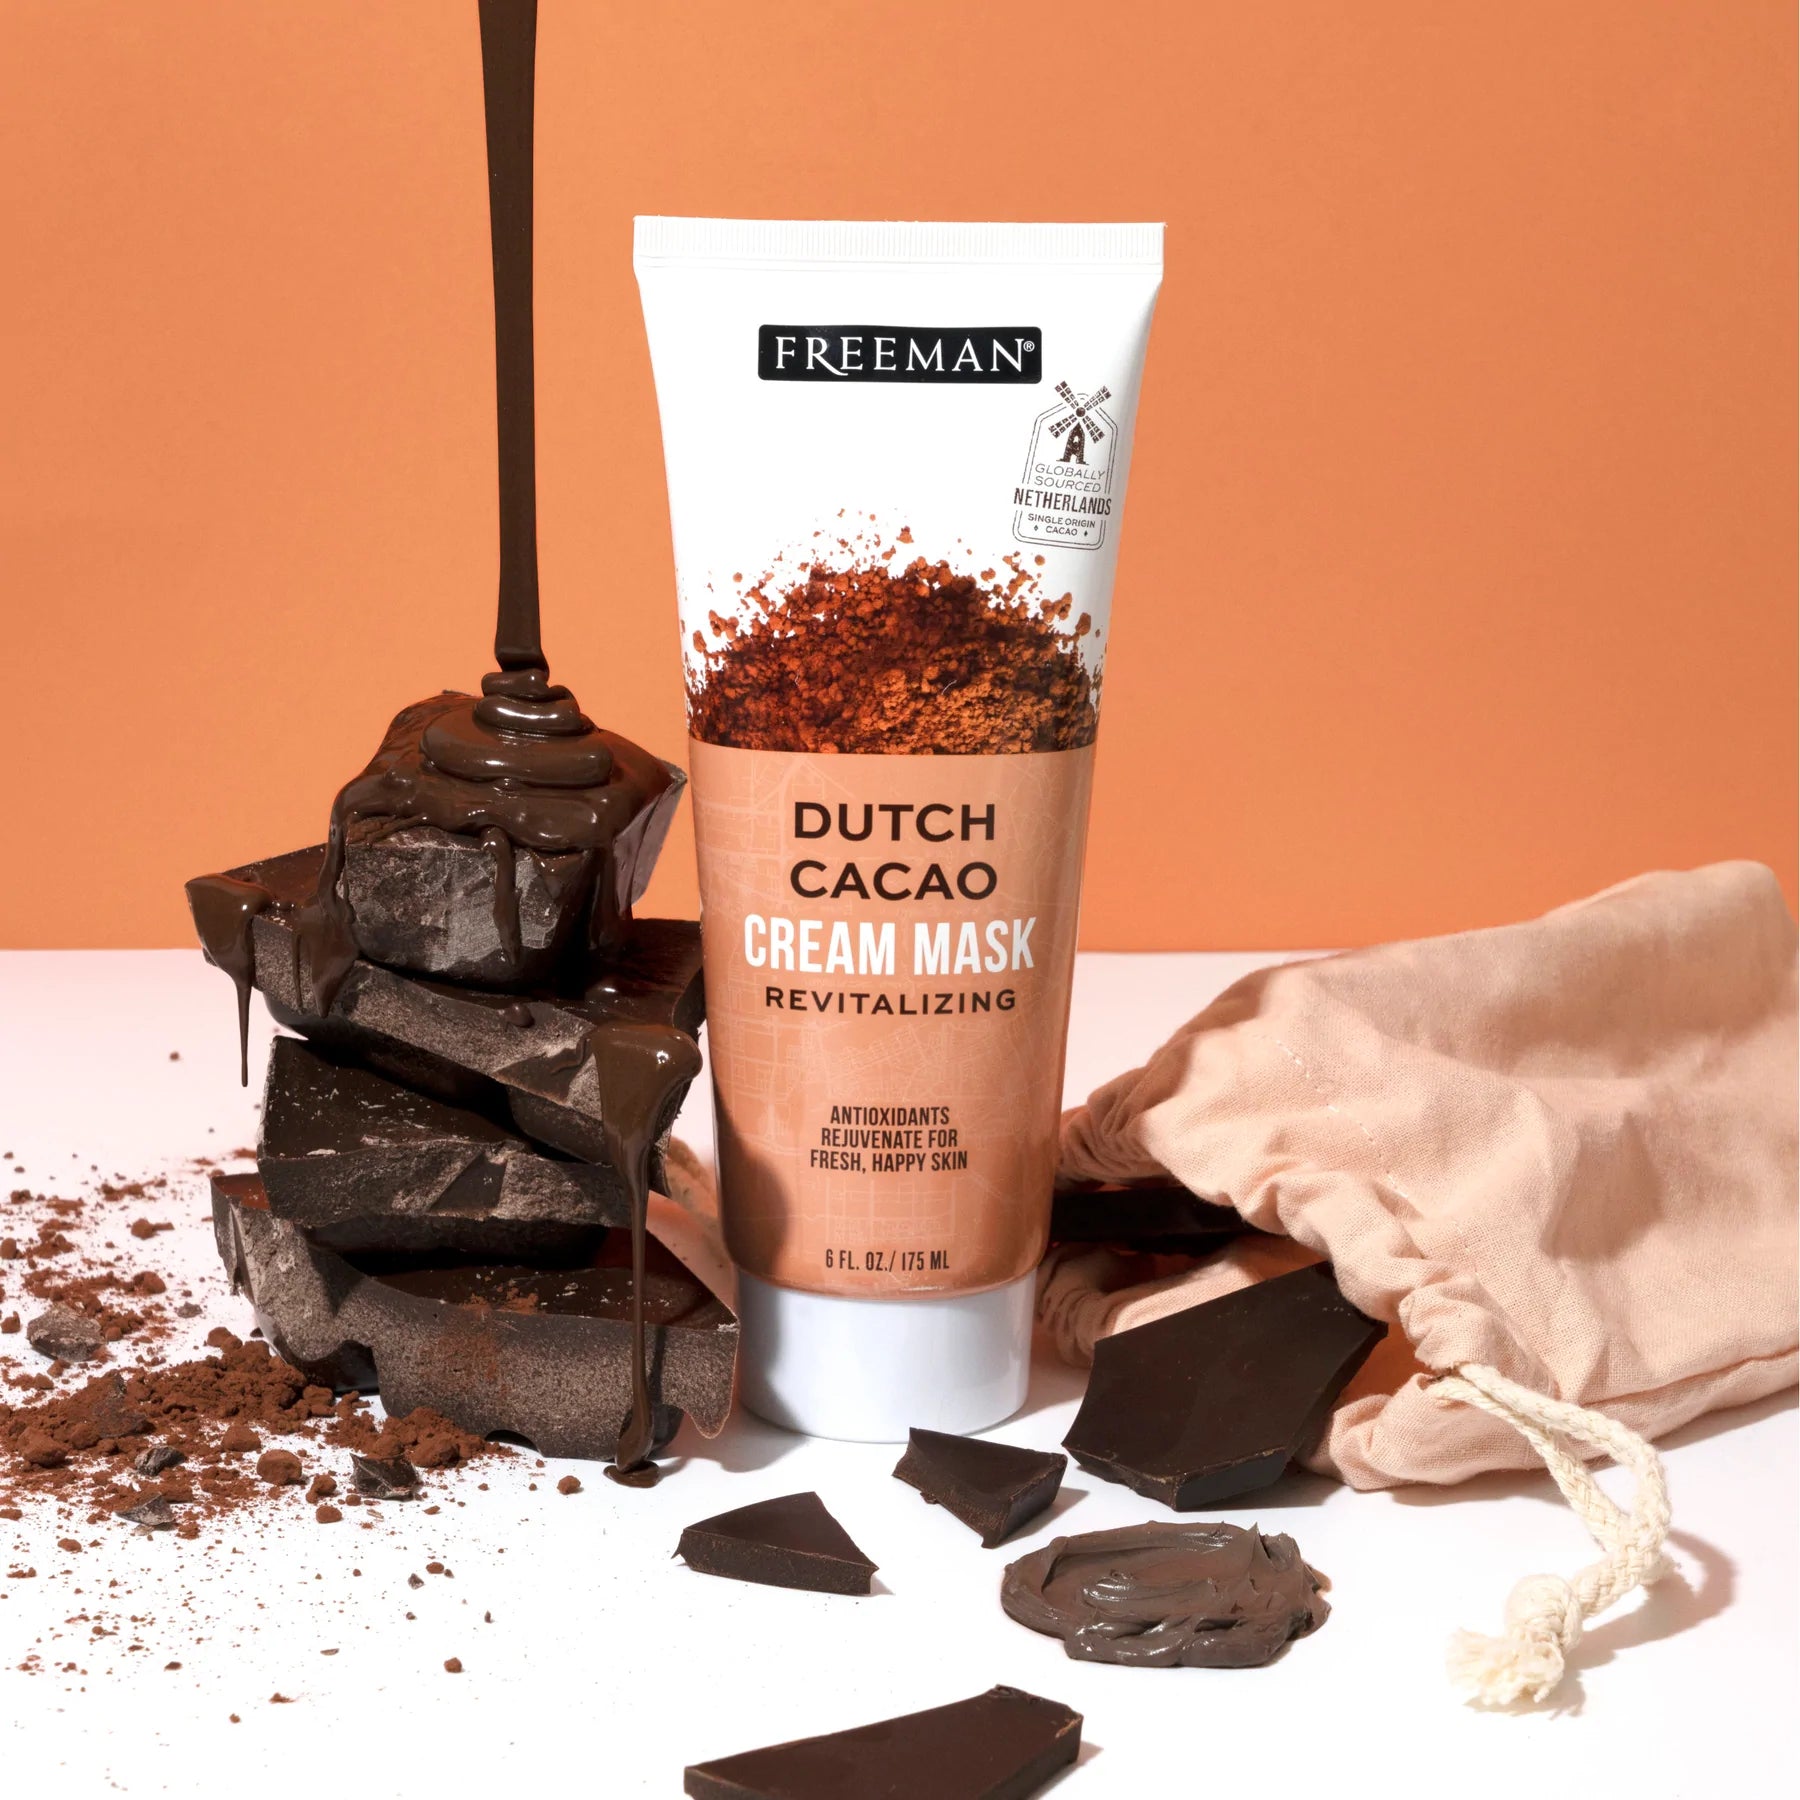 FREEMAN Dutch Cacao Cream Mask Revitalizing ماسك الكاكاو الكريمي للبشرة